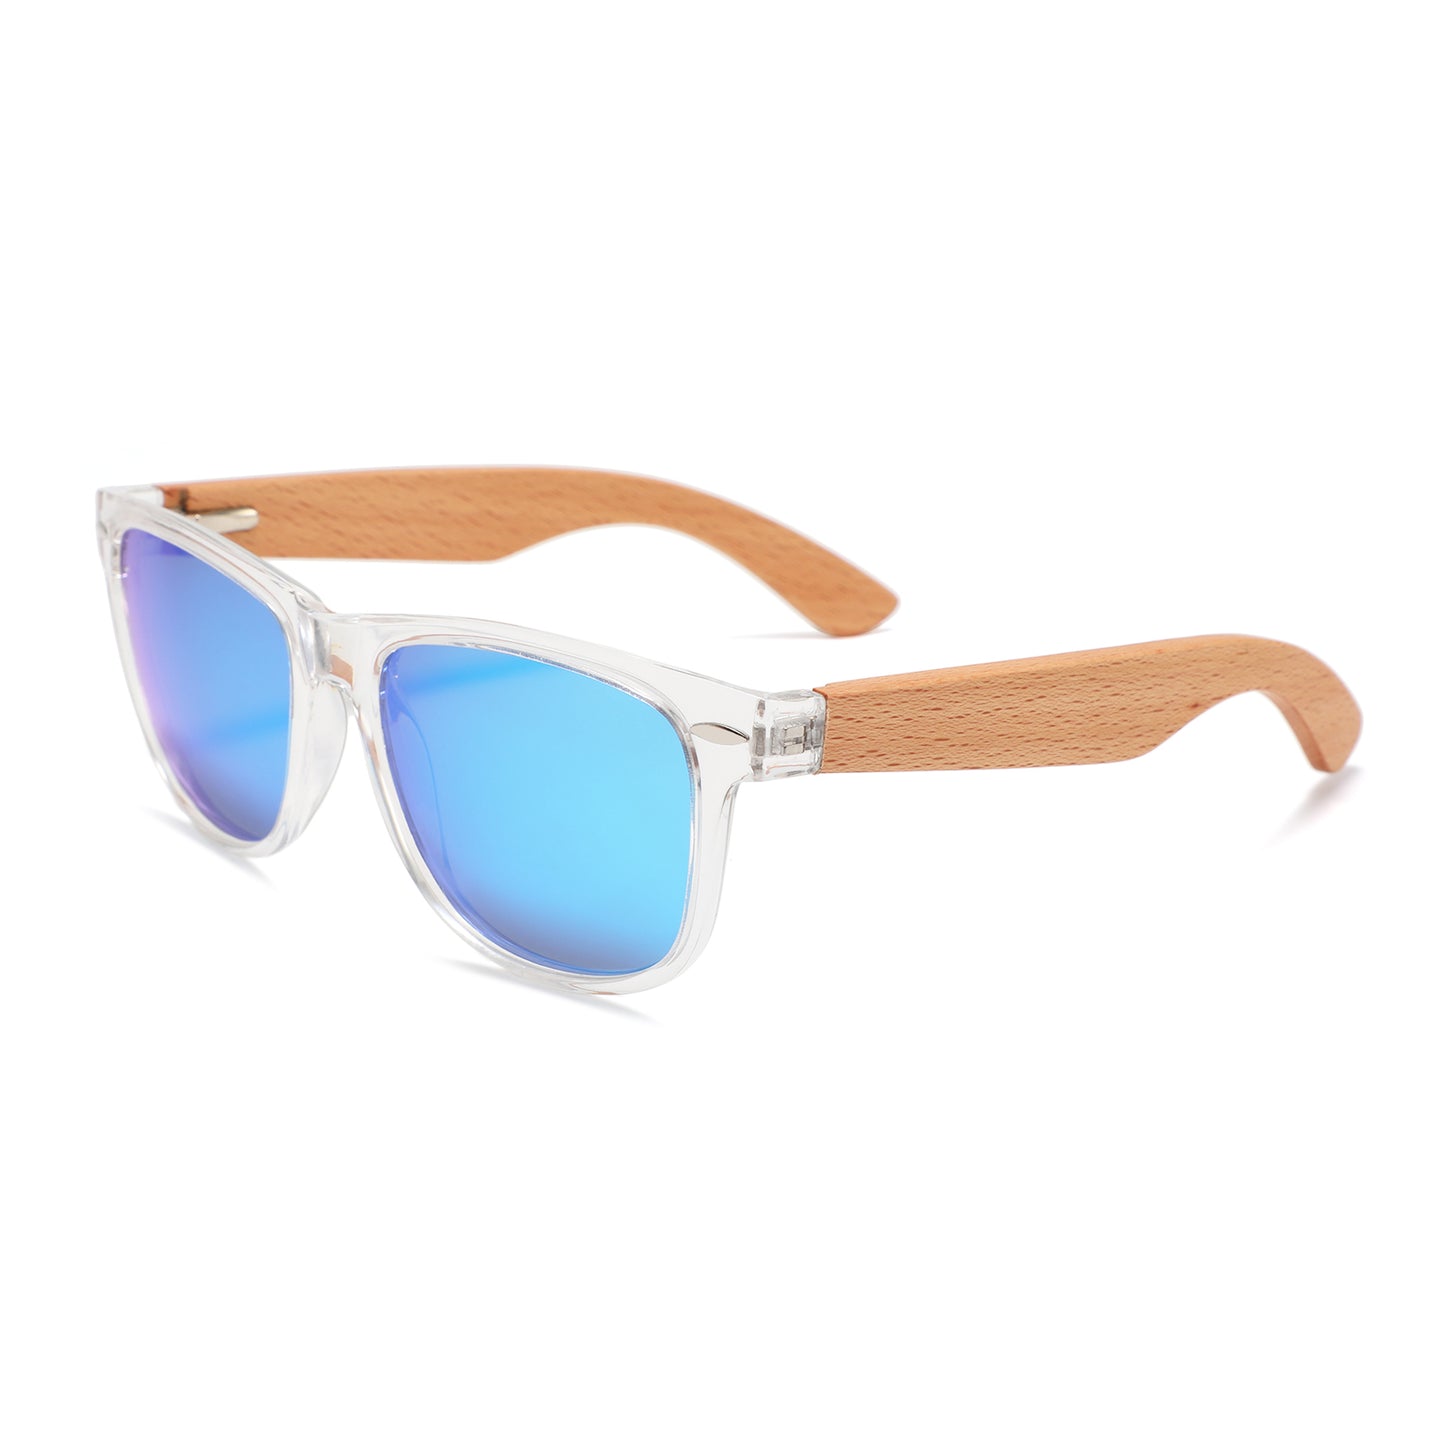 VAYA CLEAR BLUE Sunglasses Polarised Mirror Lens Wooden Arms